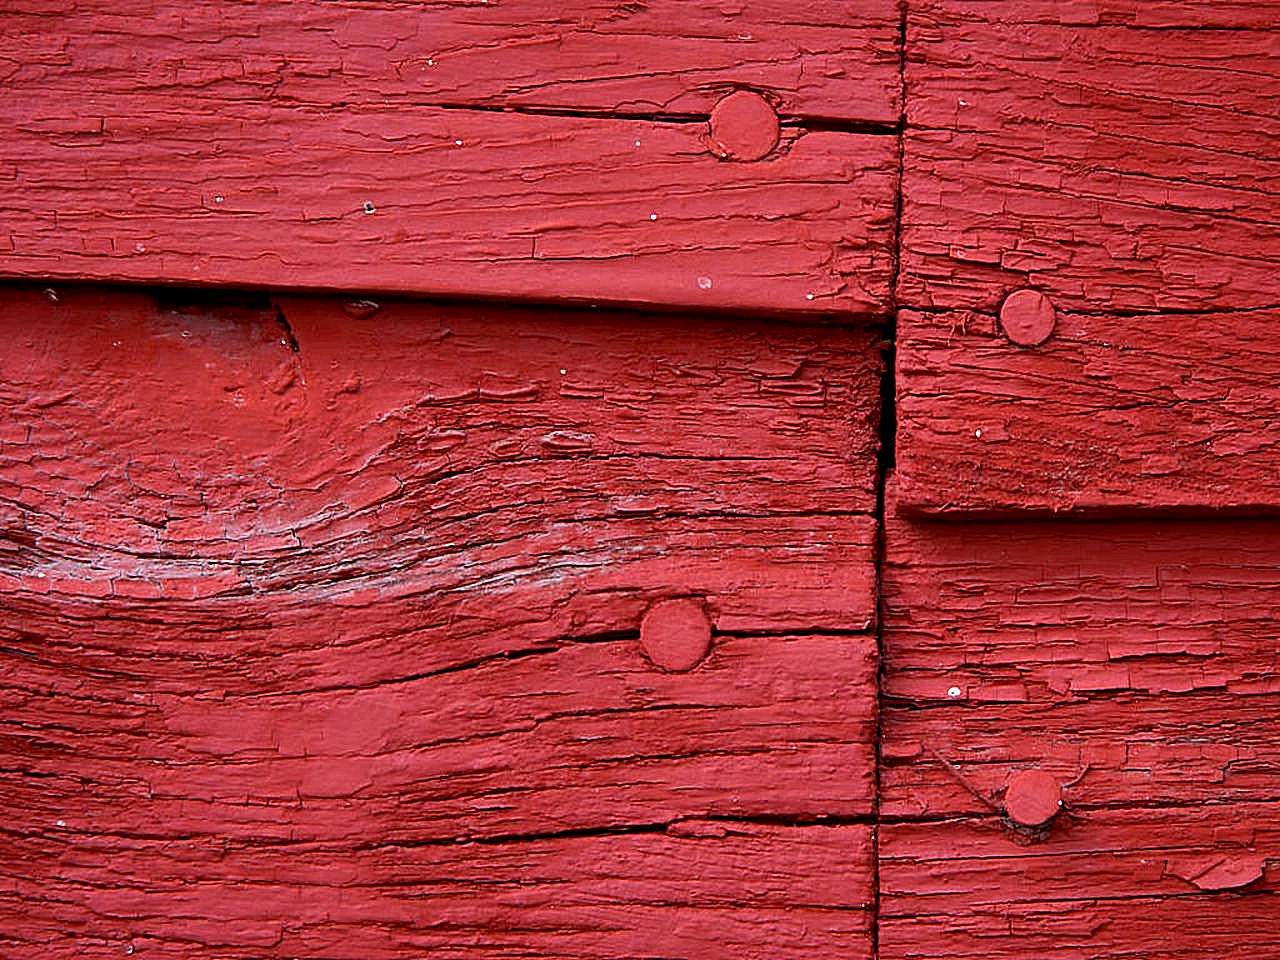 красная краска, текстура краски, фон, скачать фото, red color paint texture background